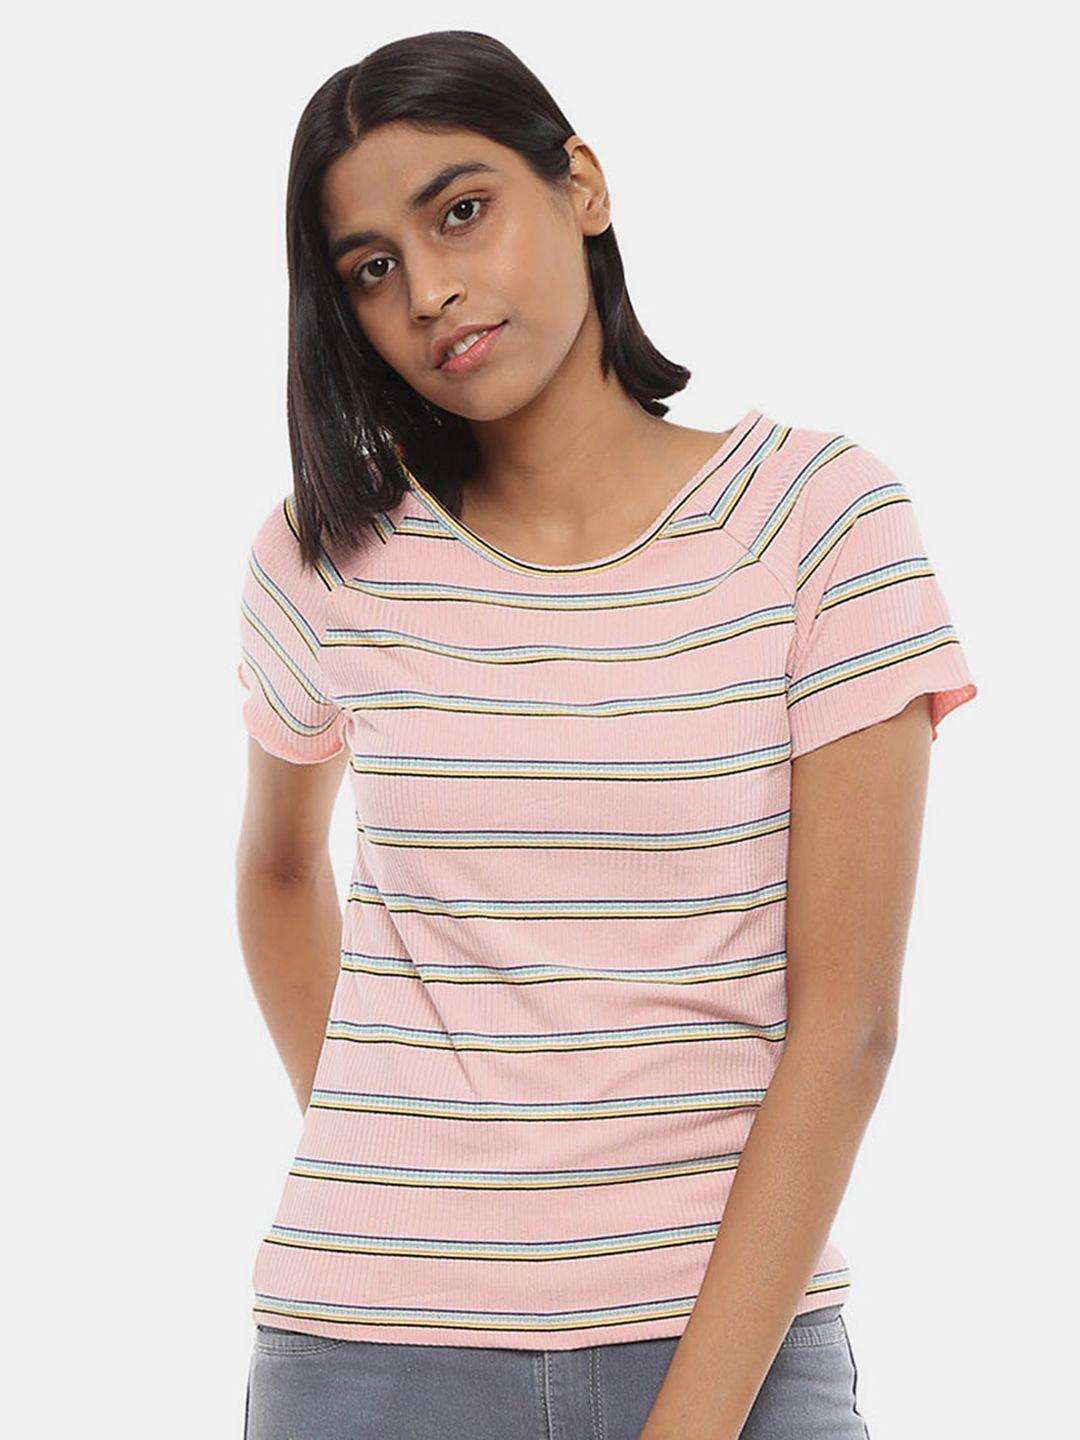 v-mart women striped cotton t-shirt